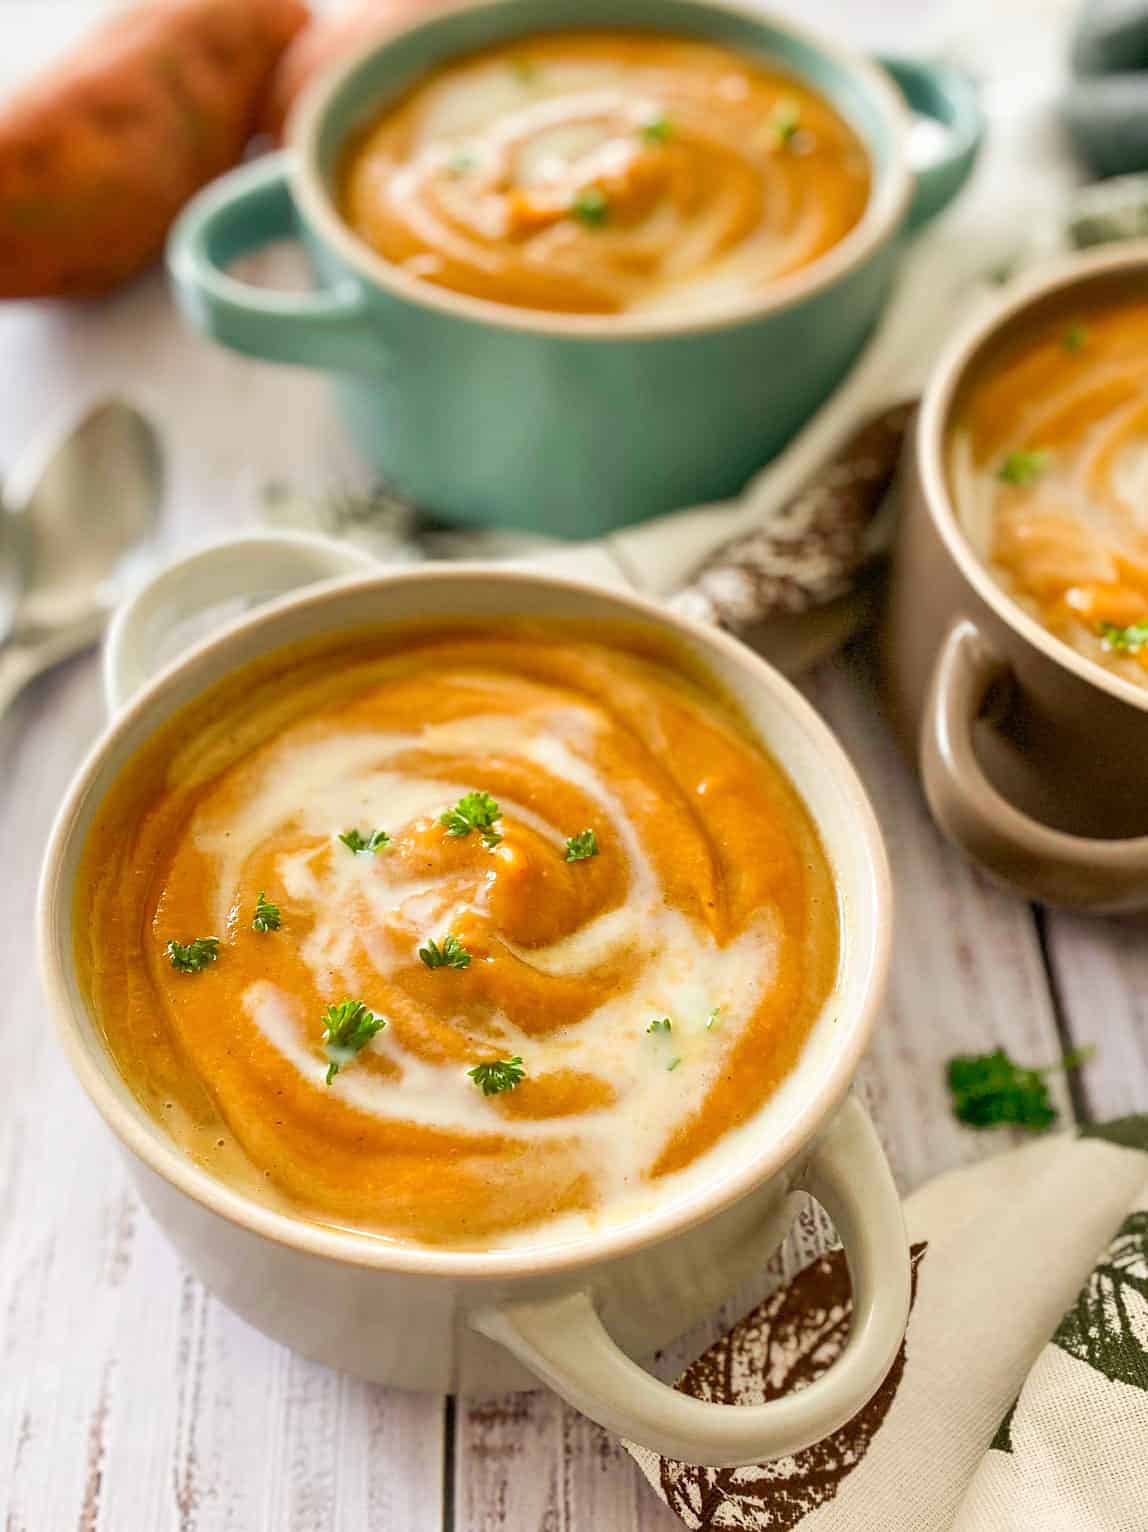 Three bowls of orange creamy soup with parsley garnish.